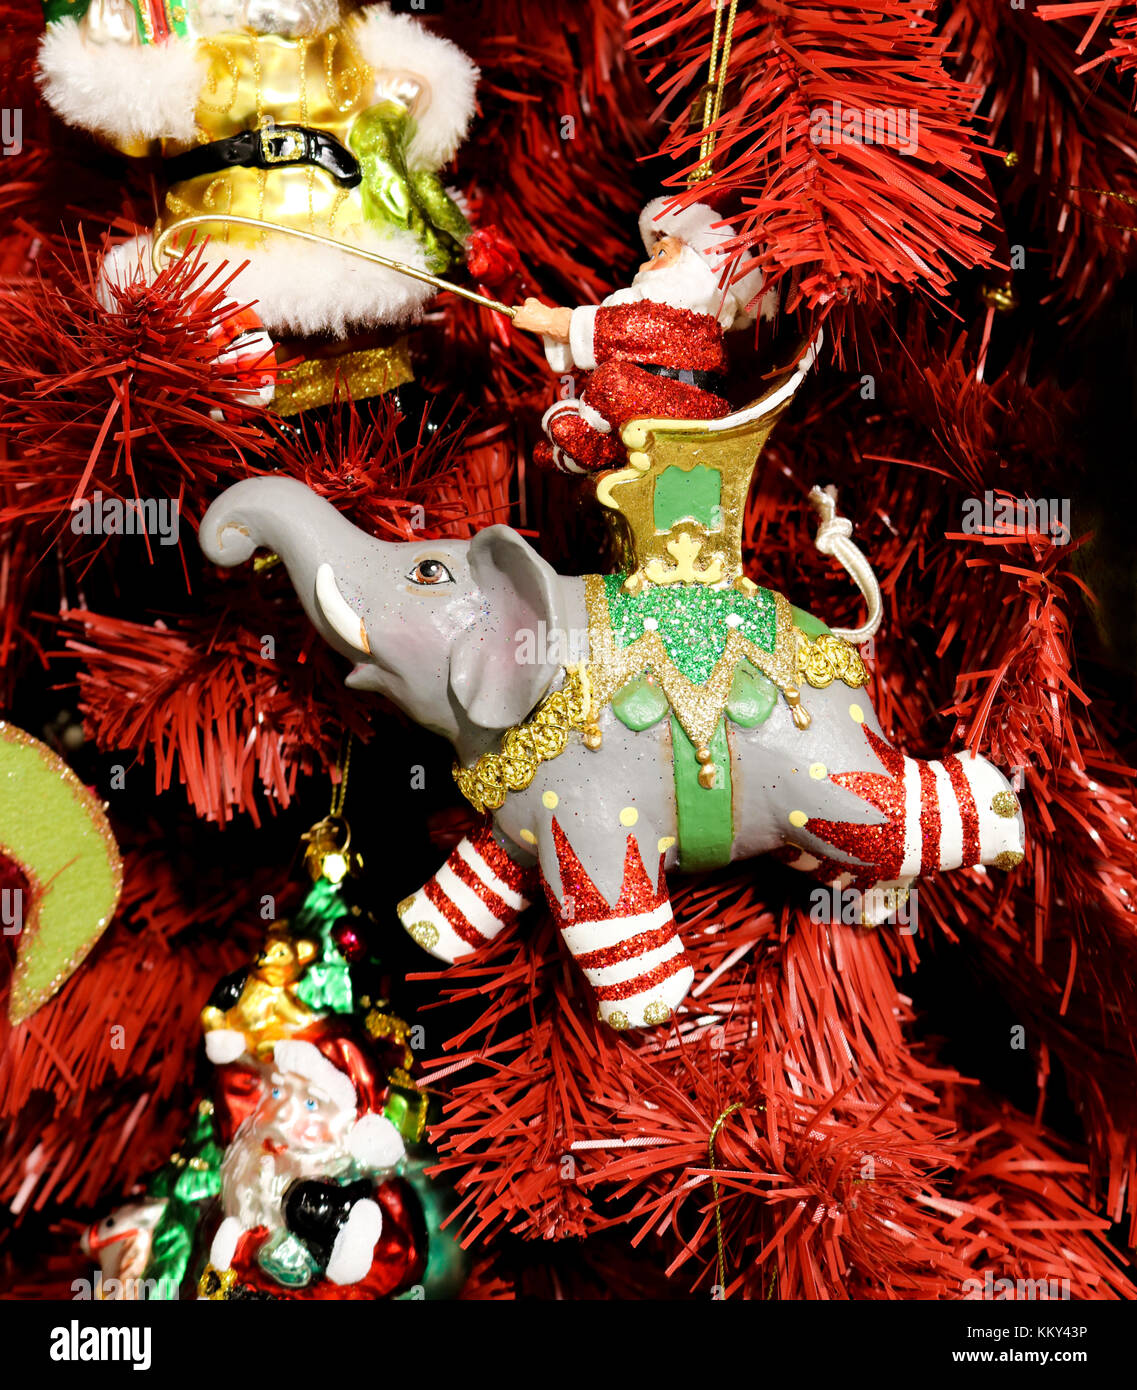 Santa on elephant ornament on red Christmas tree Stock Photo